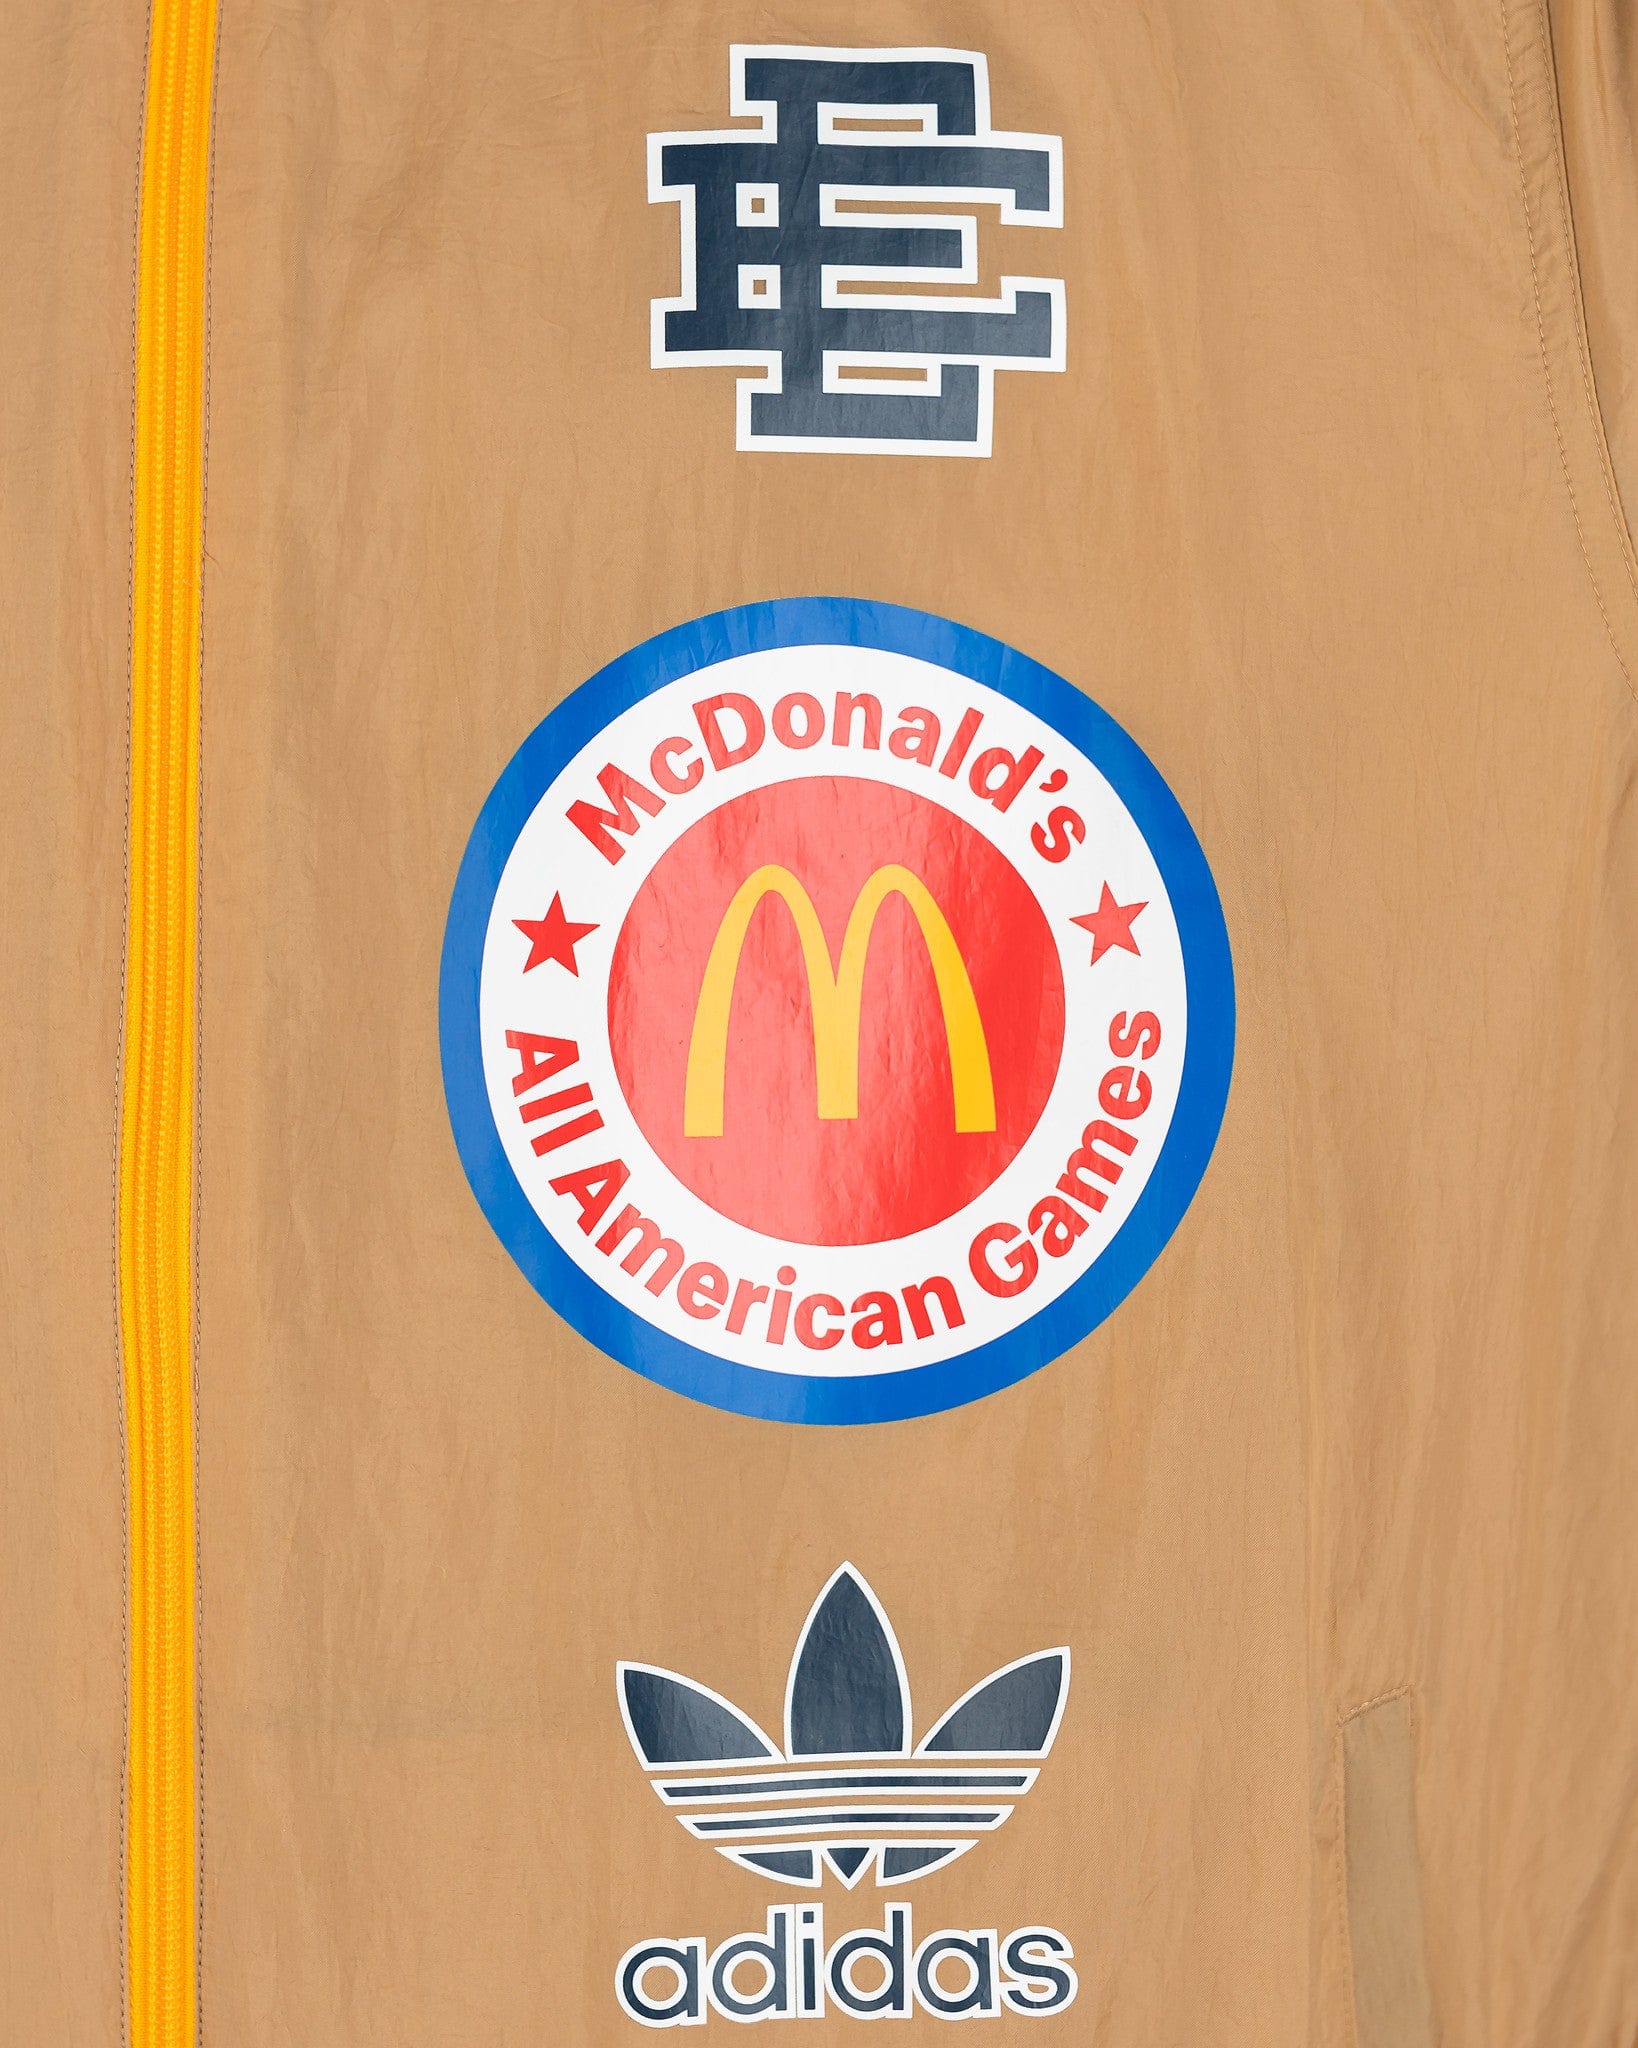 Adidas Men's Jackets Eric Emanuel McDonalds All American Ceremony Jacket in Khaki